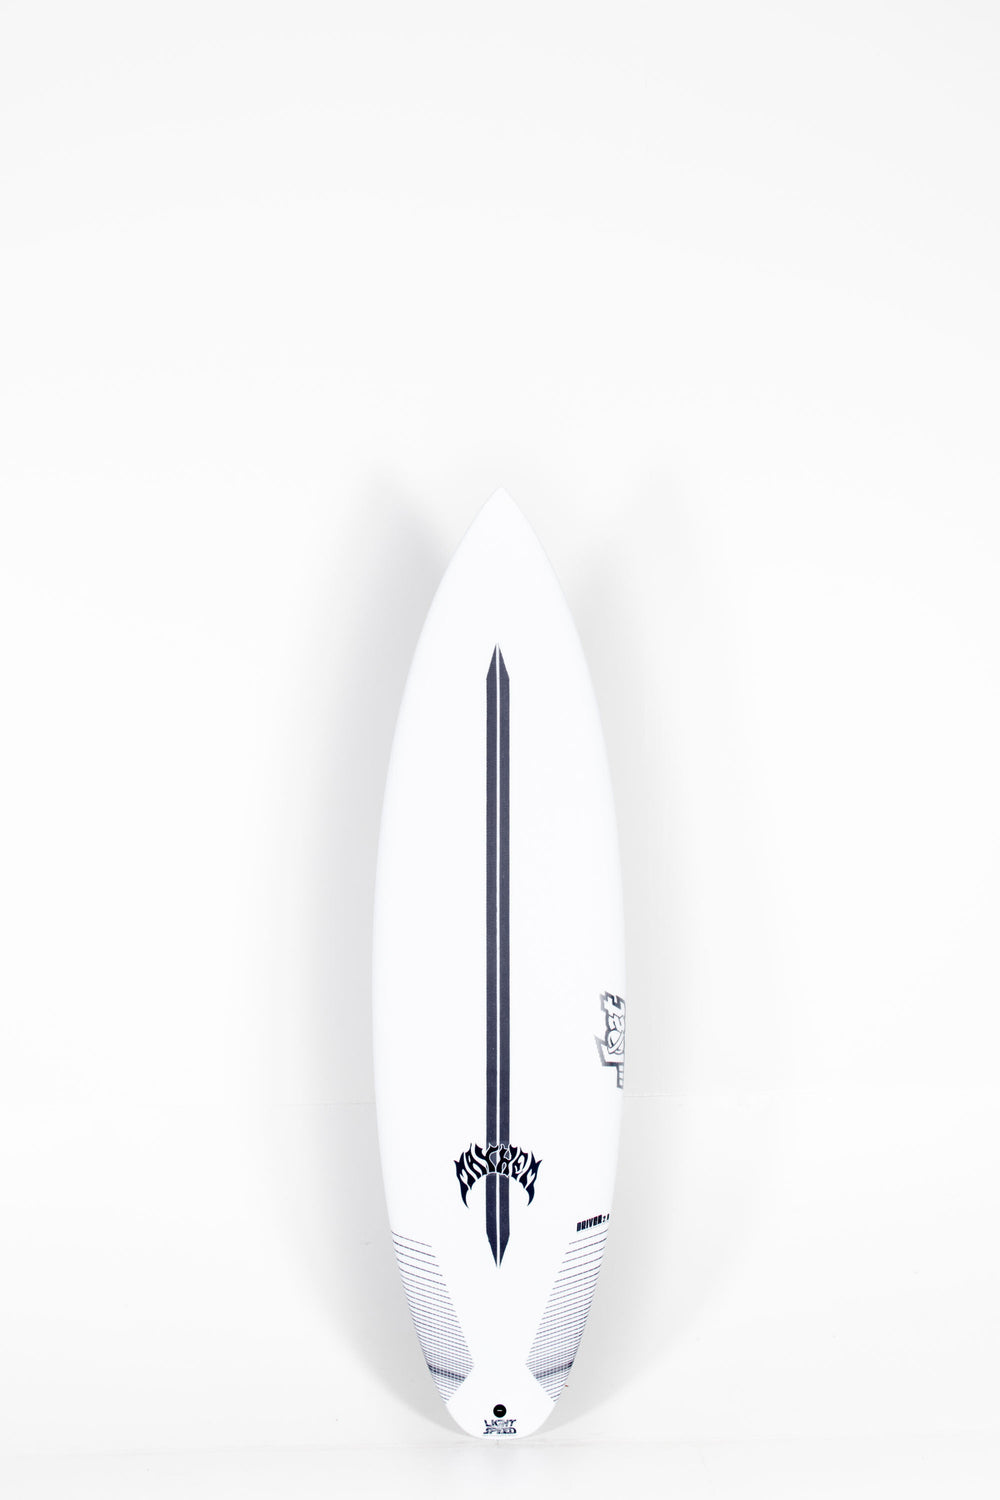 Lost Surfboard - DRIVER 2.0 by Matt Biolos - Light Speed - 6'0” x